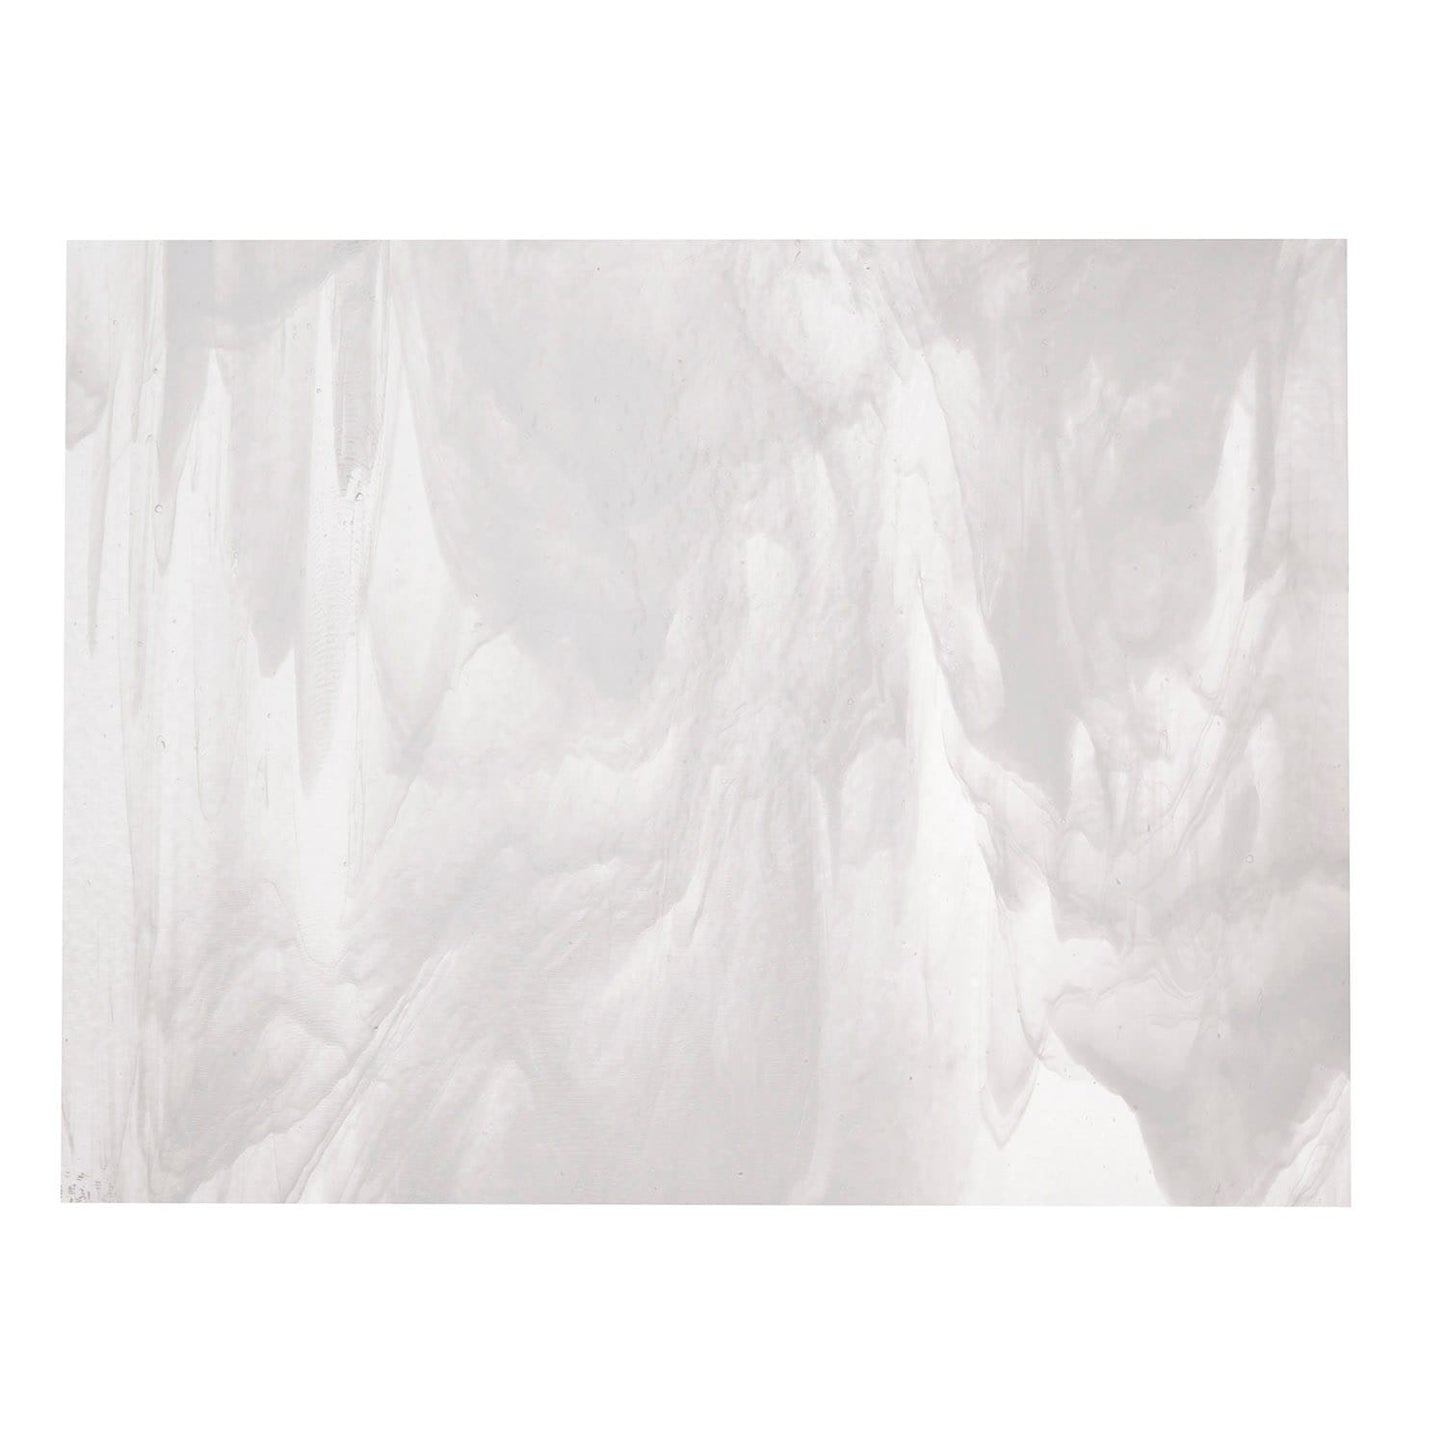 Bullseye COE90 Fusing Glass 002130 Clear, White Opalescent Half Sheet